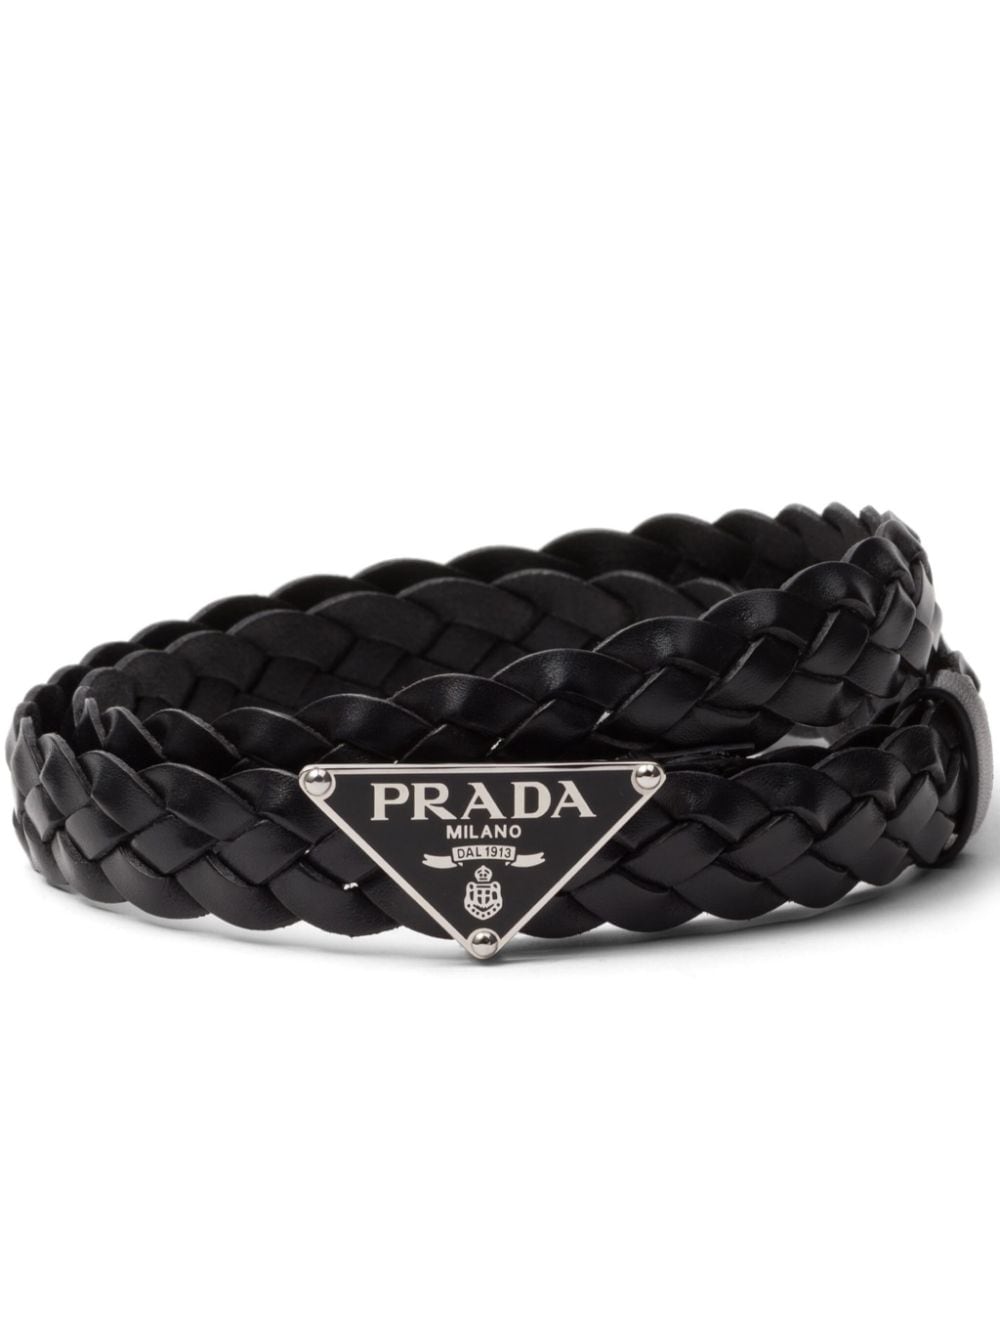 Triangle-logo braided leather belt<BR/><BR/><BR/>